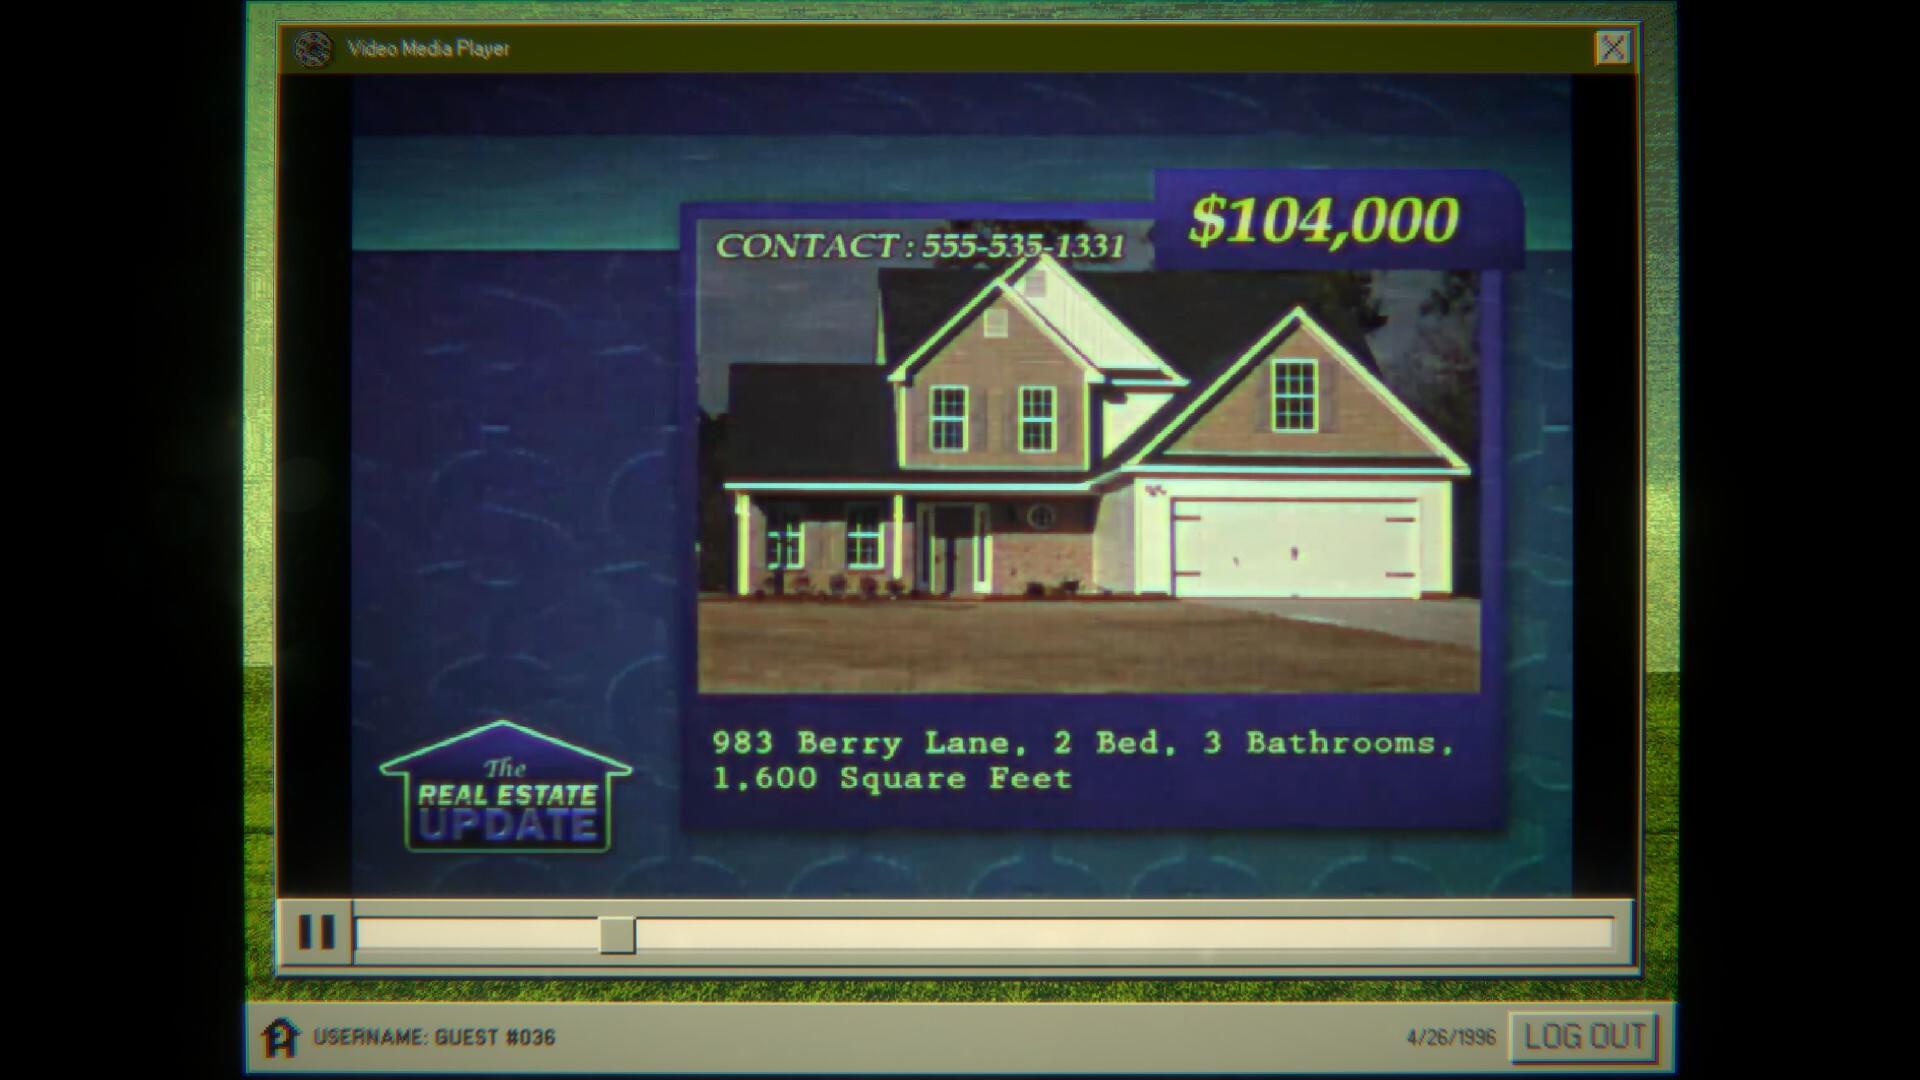 Home Safety Hotline screenshot game